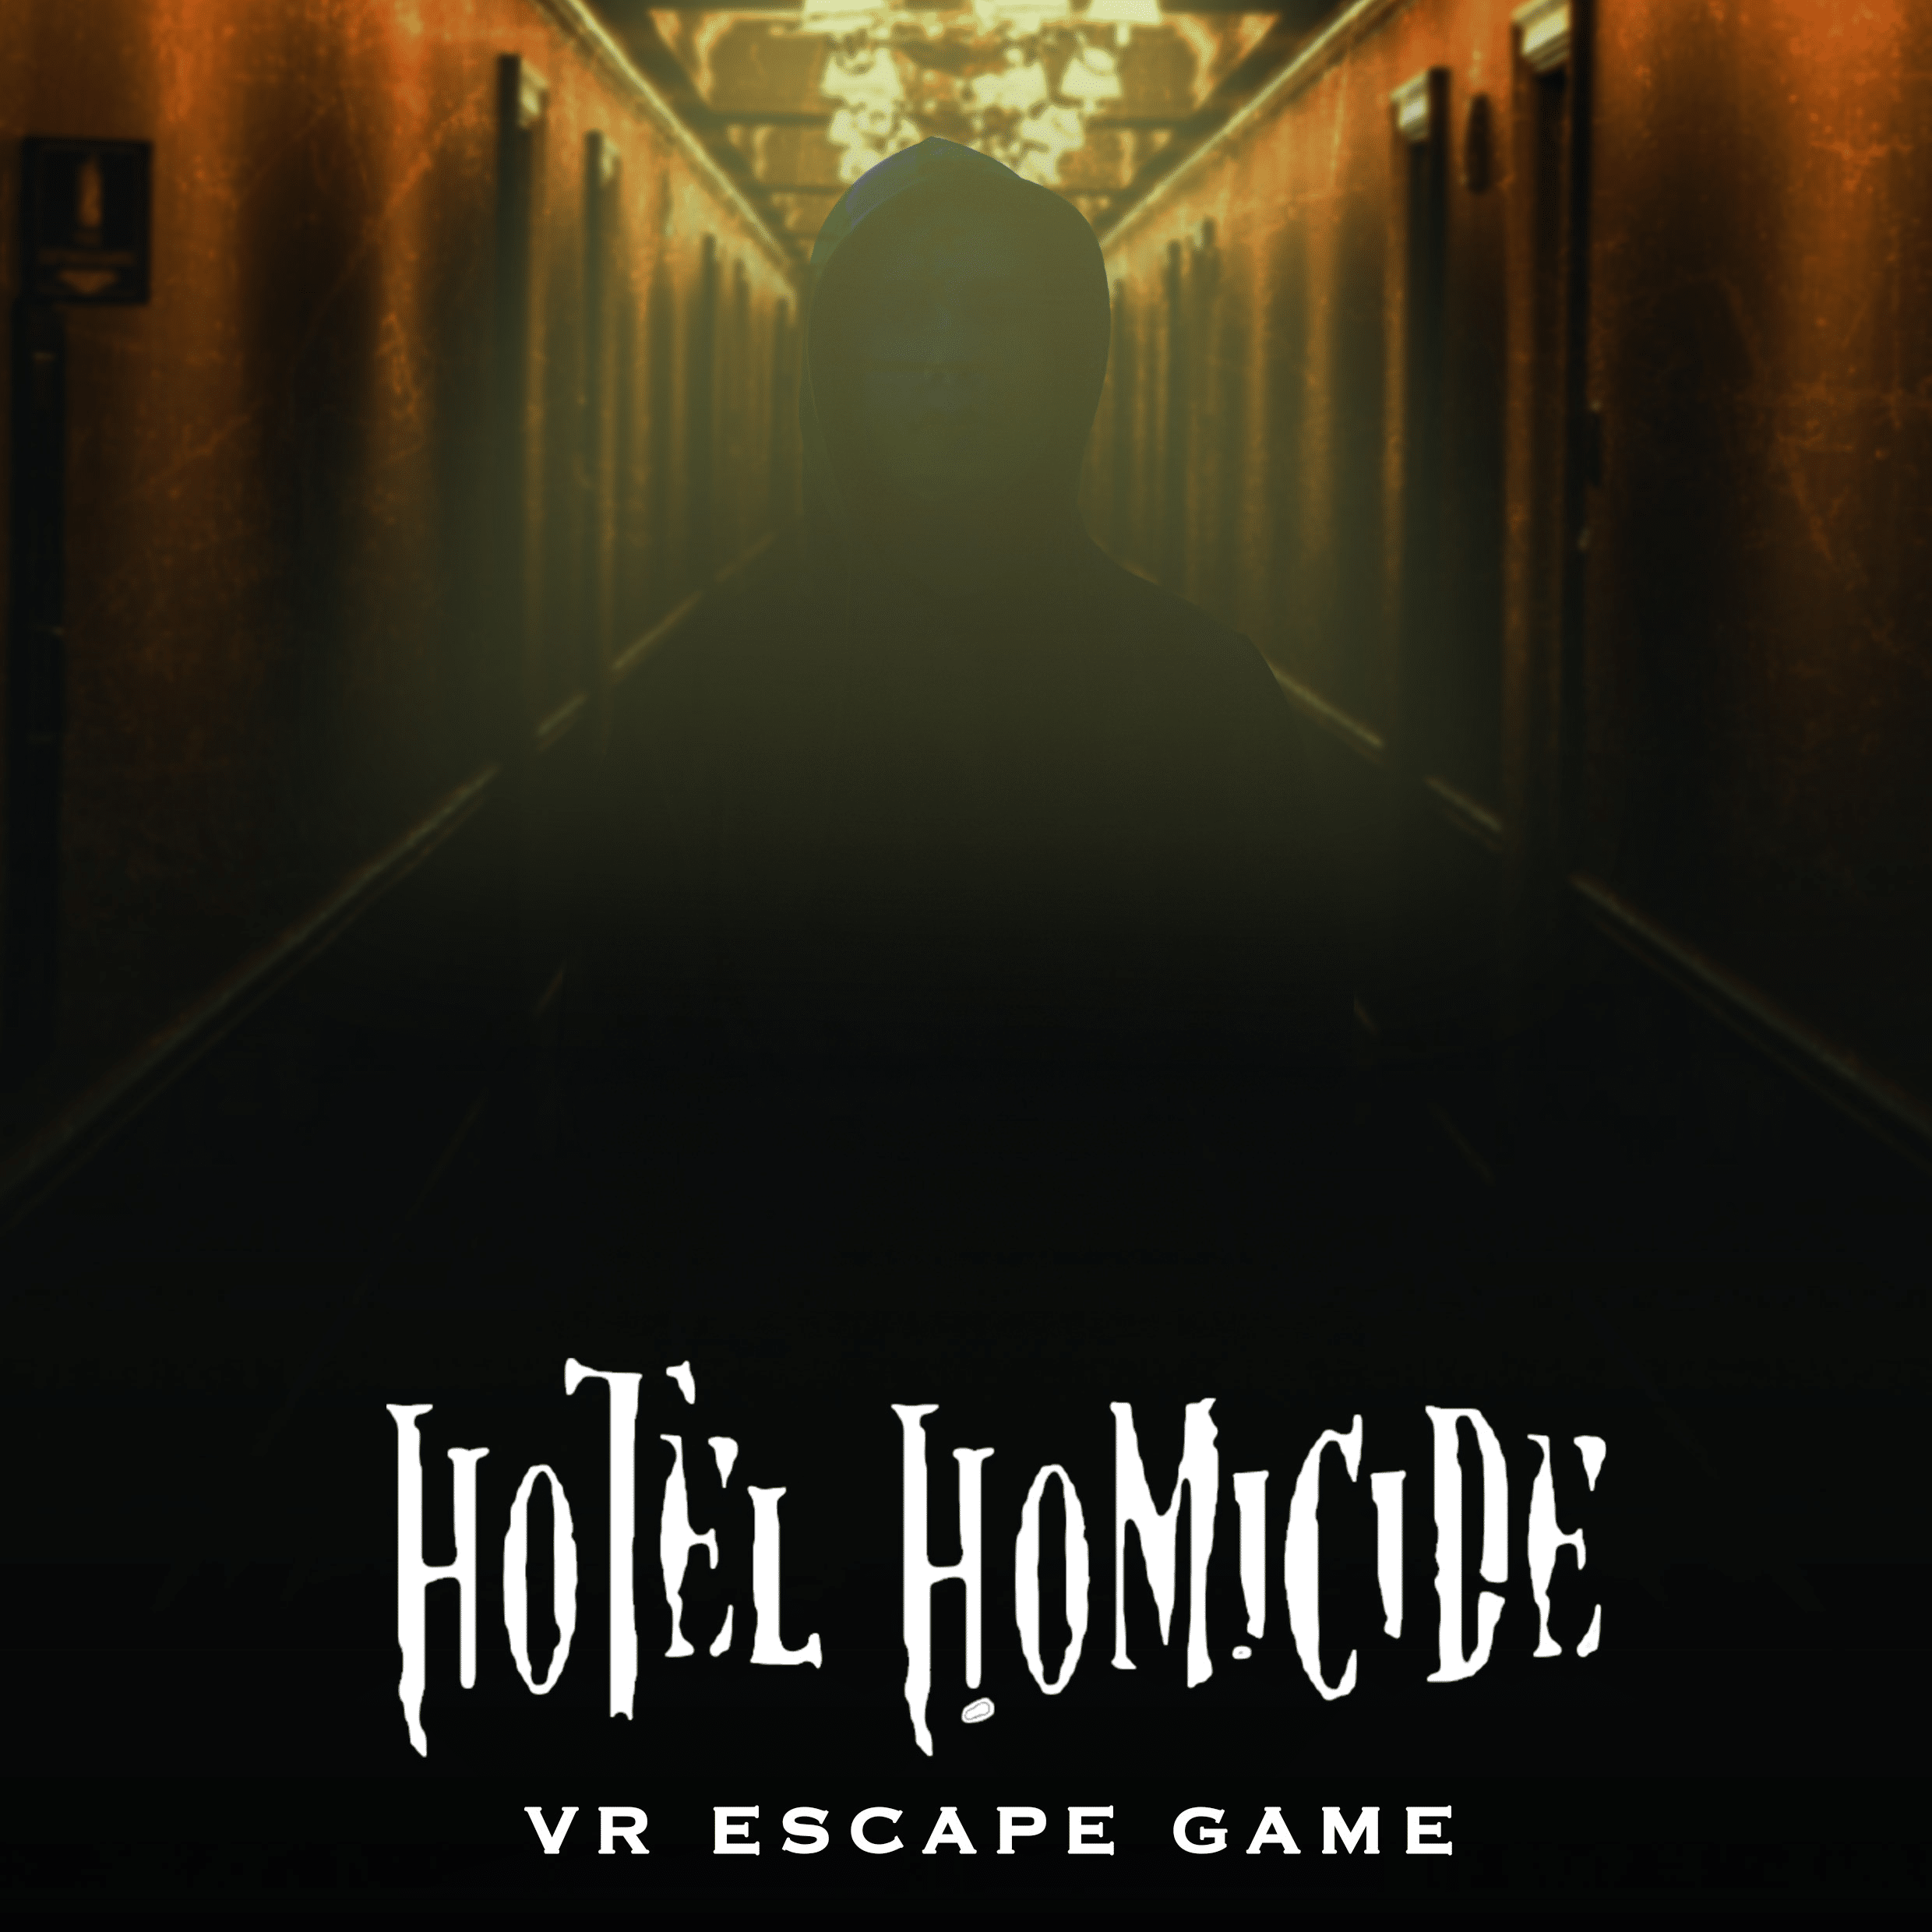 Hotel homicide vierkant